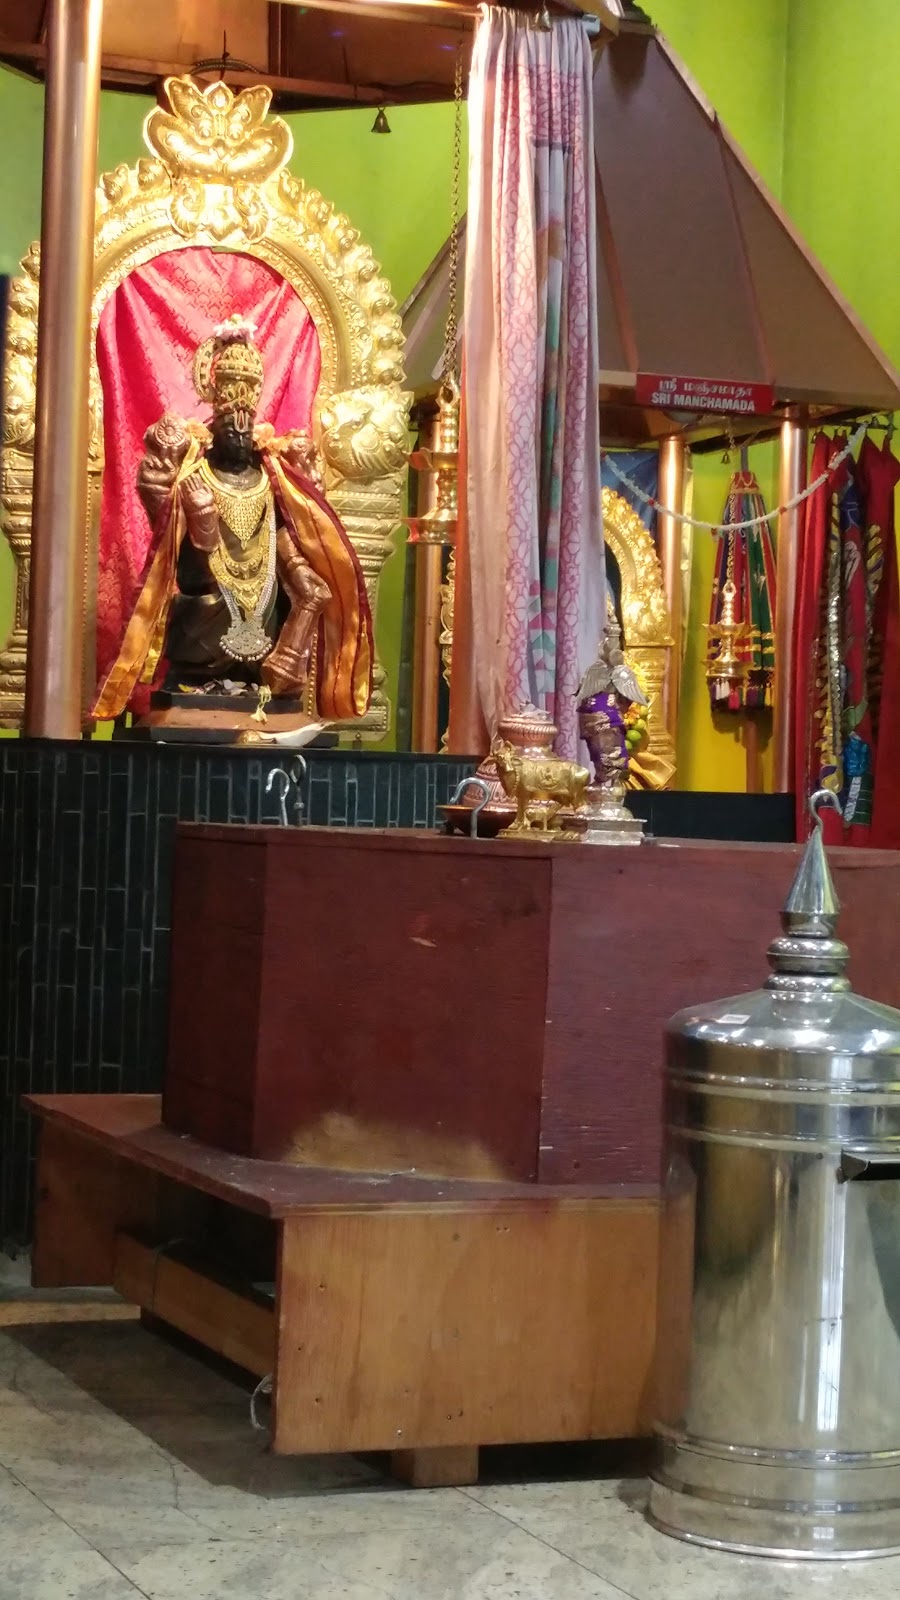 Sabarimalai Ayyappa Alayam | hindu temple | 2721 Markham Rd Scarborough, ON M1X 1L5 Markham Rd, Scarborough, ON M1X 1L5, Canada | 4163357700 OR +1 416-335-7700